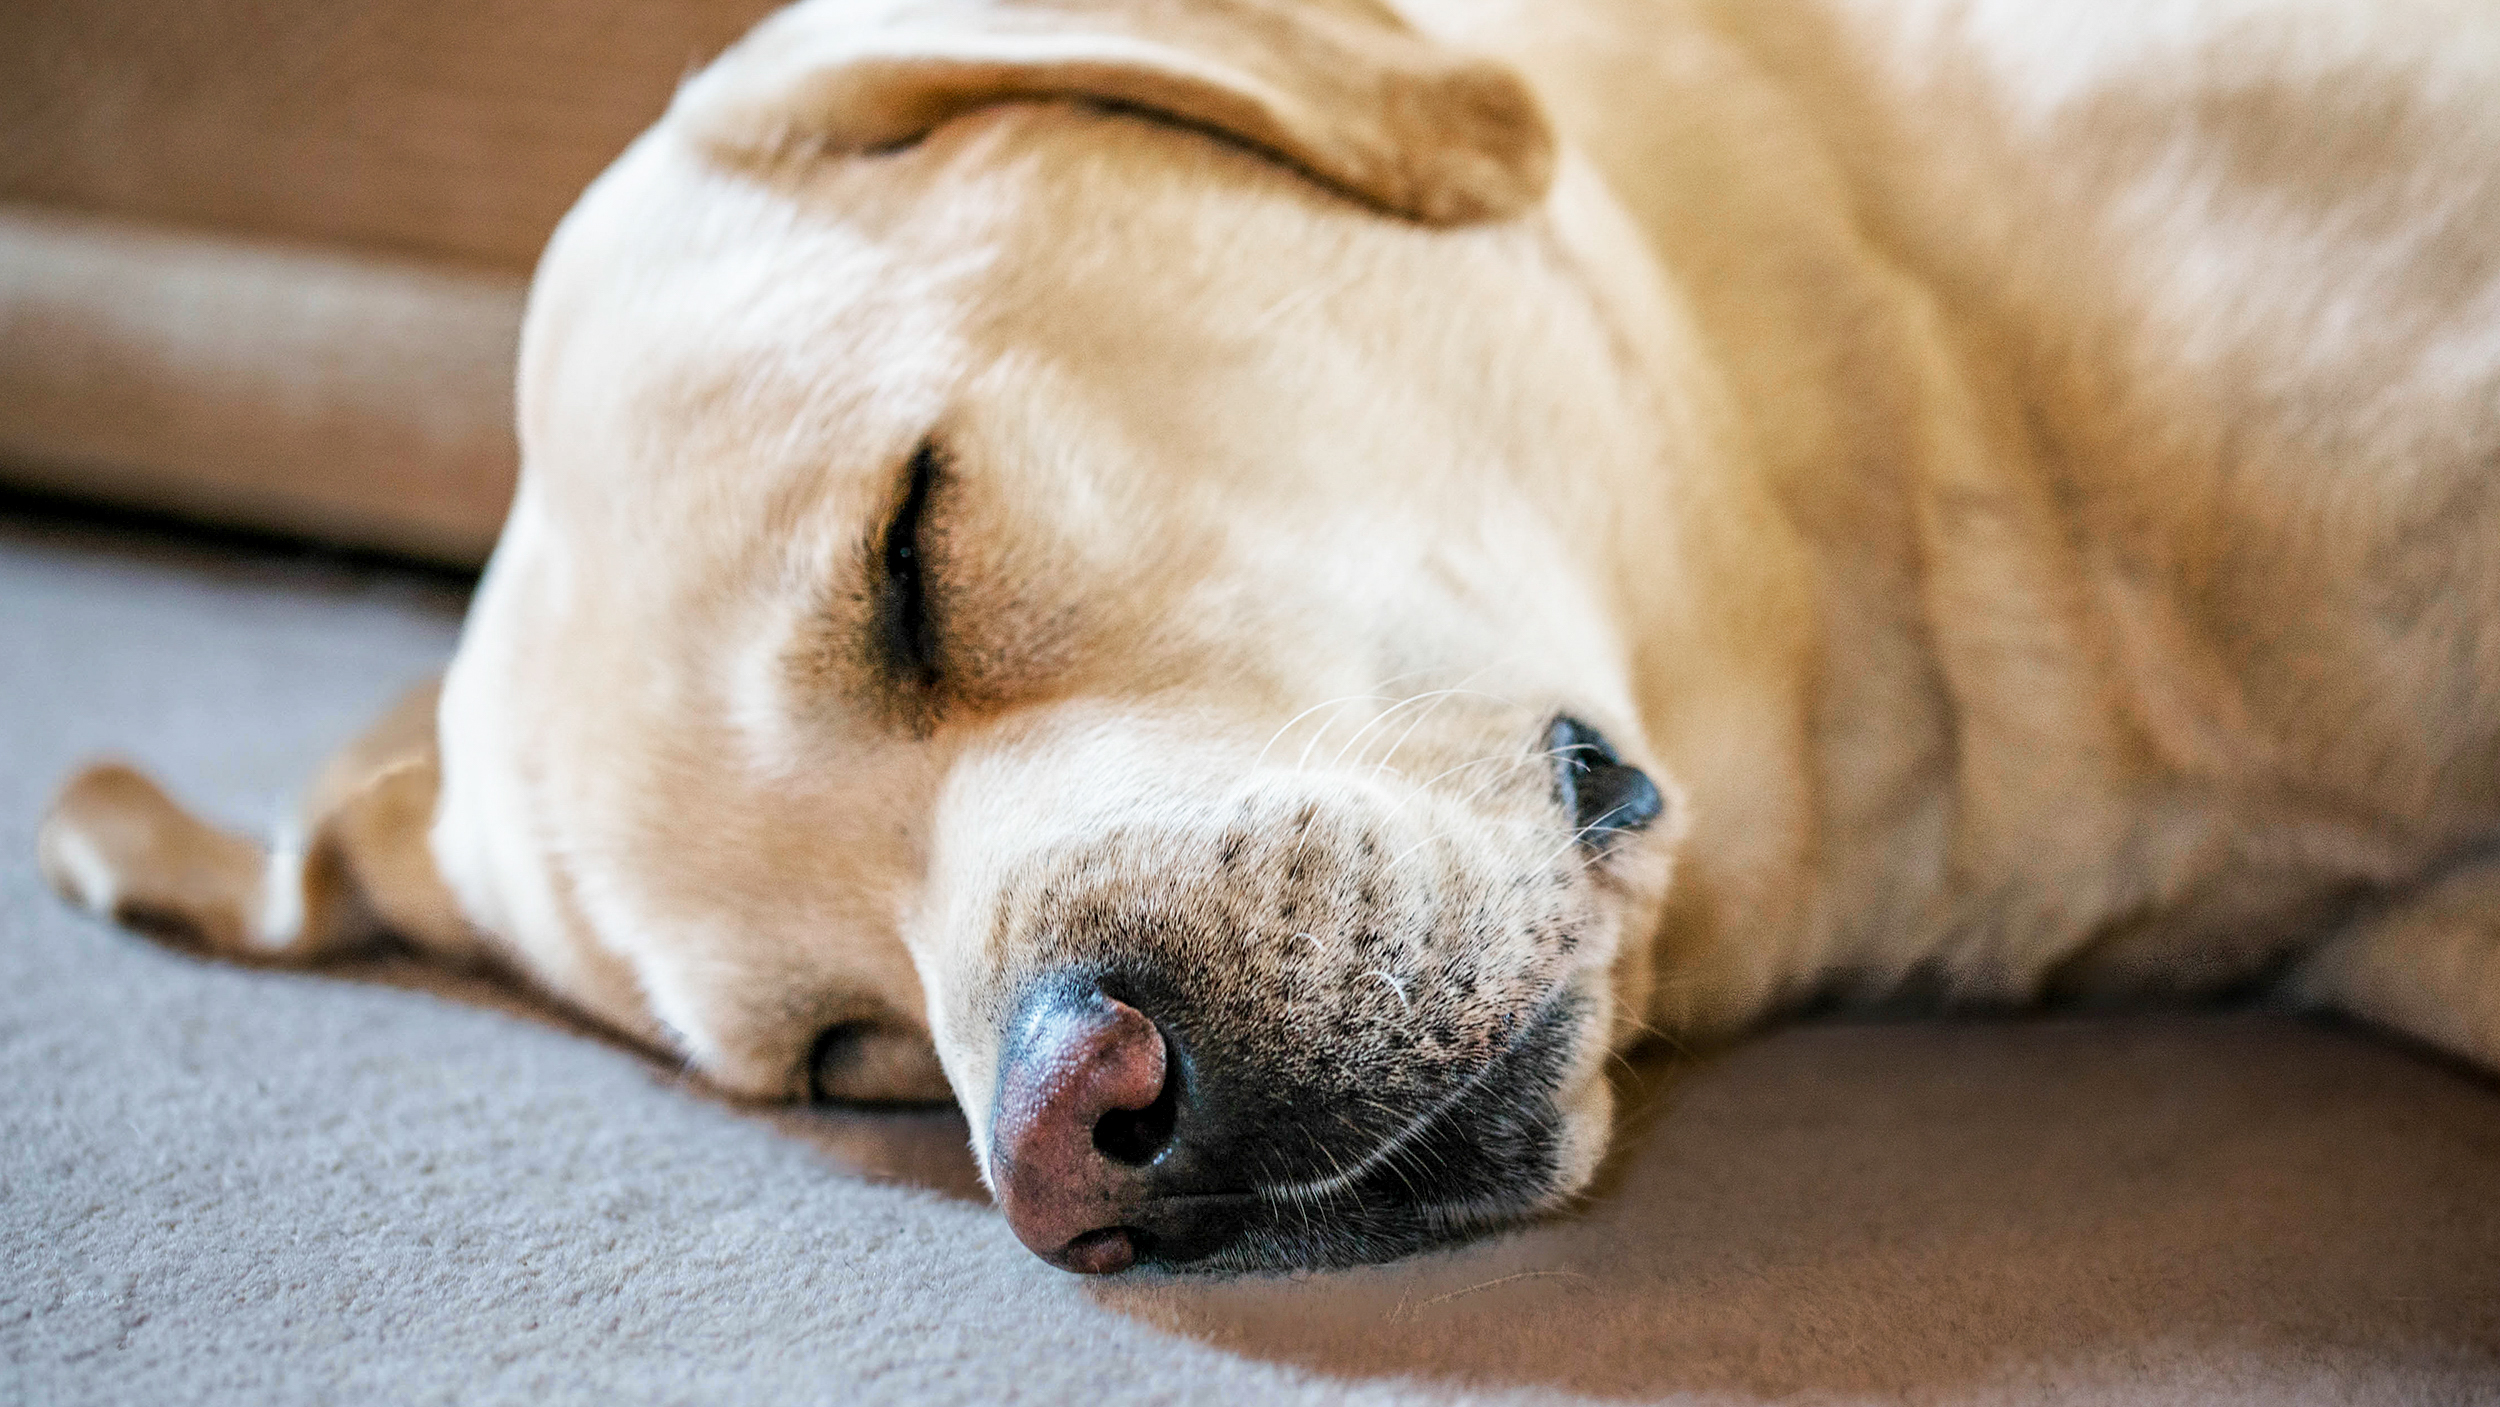 Adult Labrador Retriever sleeping indoors on the carpet.